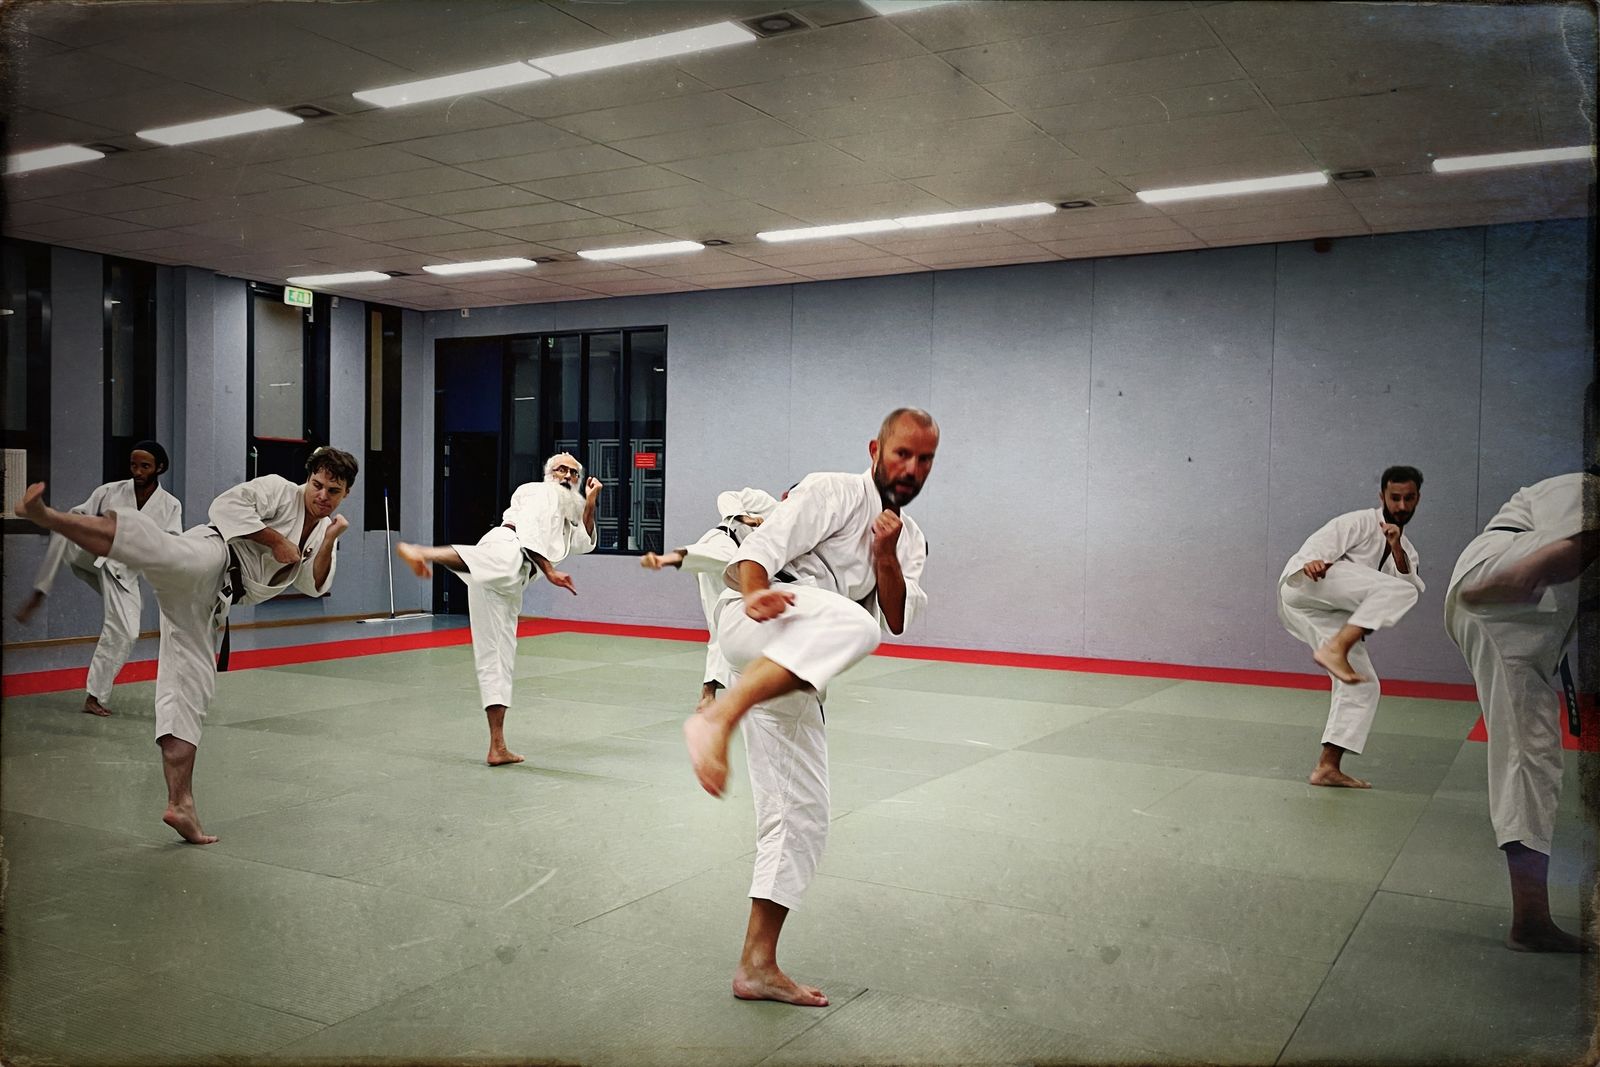 Training in the Dojo at the Sportcentrum de Pijp